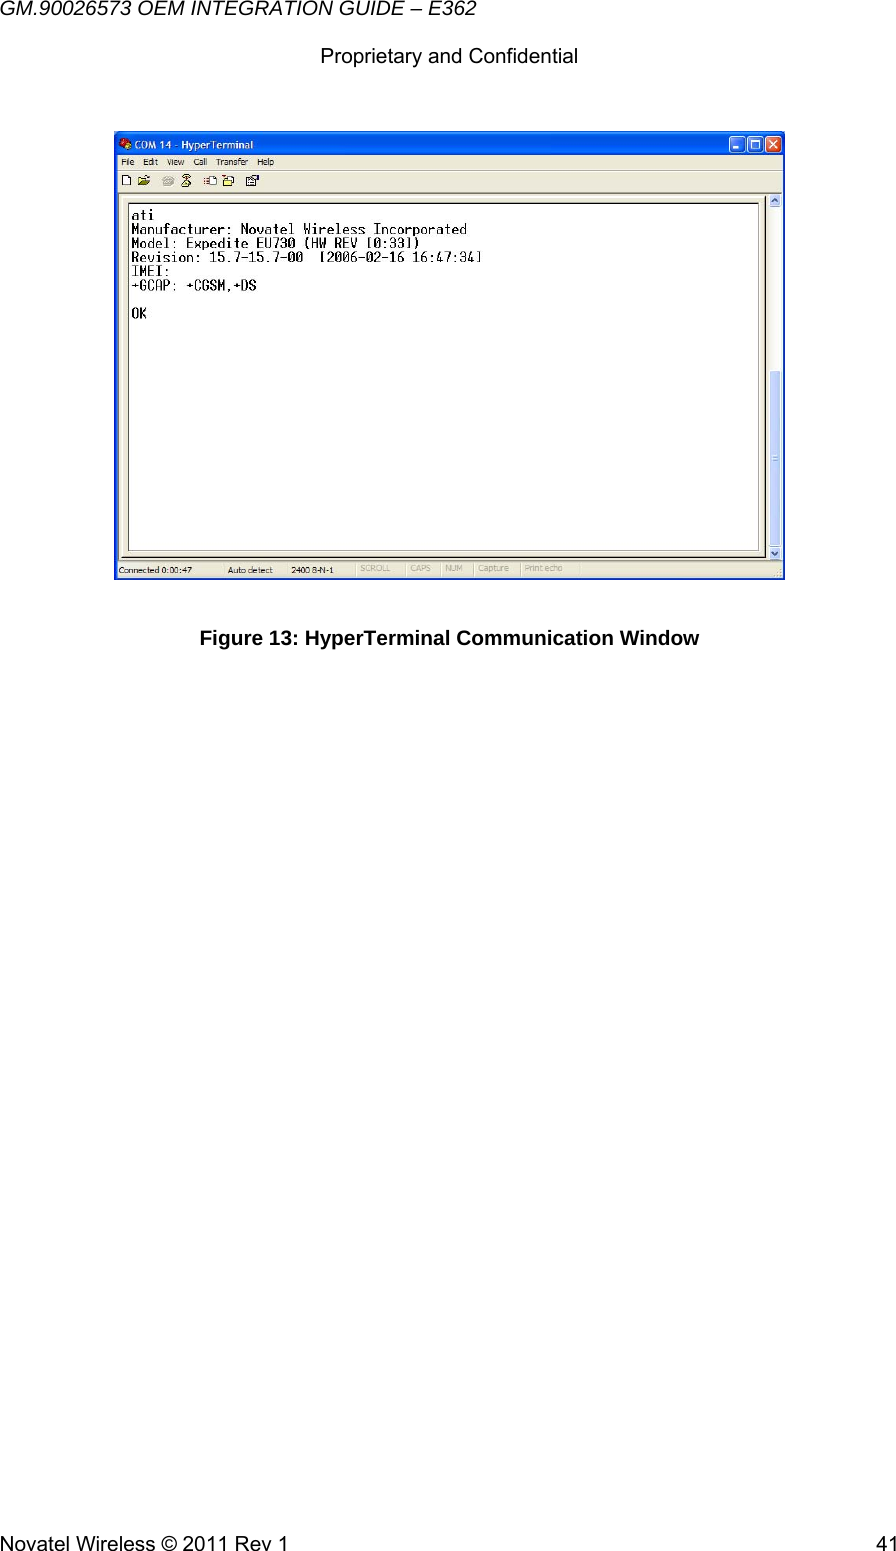 GM.90026573 OEM INTEGRATION GUIDE – E362      Proprietary and Confidential   Novatel Wireless © 2011 Rev 1  41 Figure 13: HyperTerminal Communication Window   